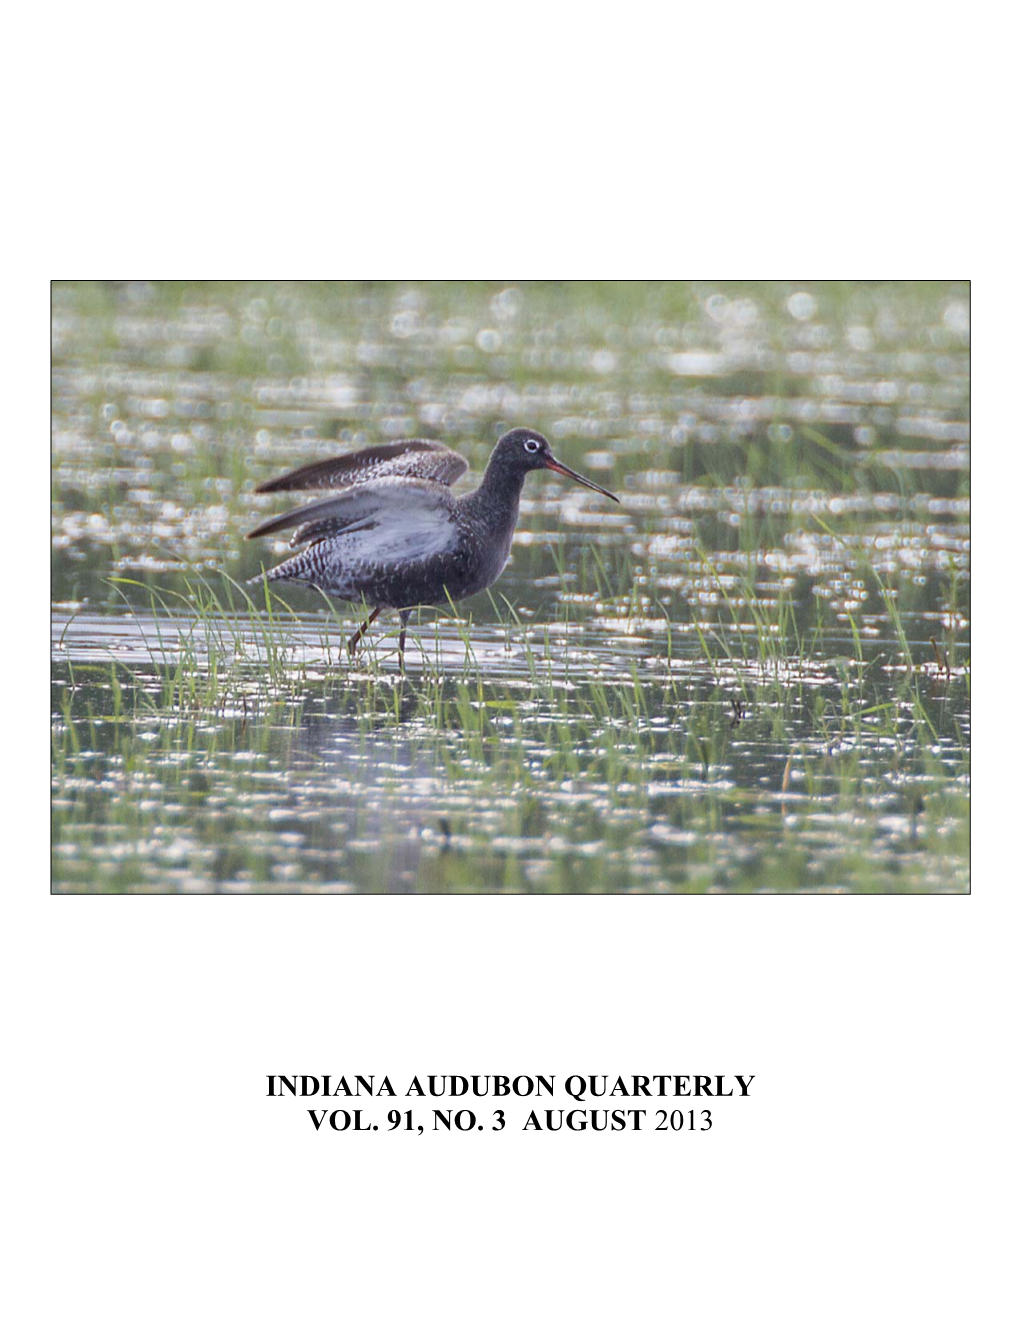 Indiana Audubon Quarterly Vol. 91, No. 3 August 2013